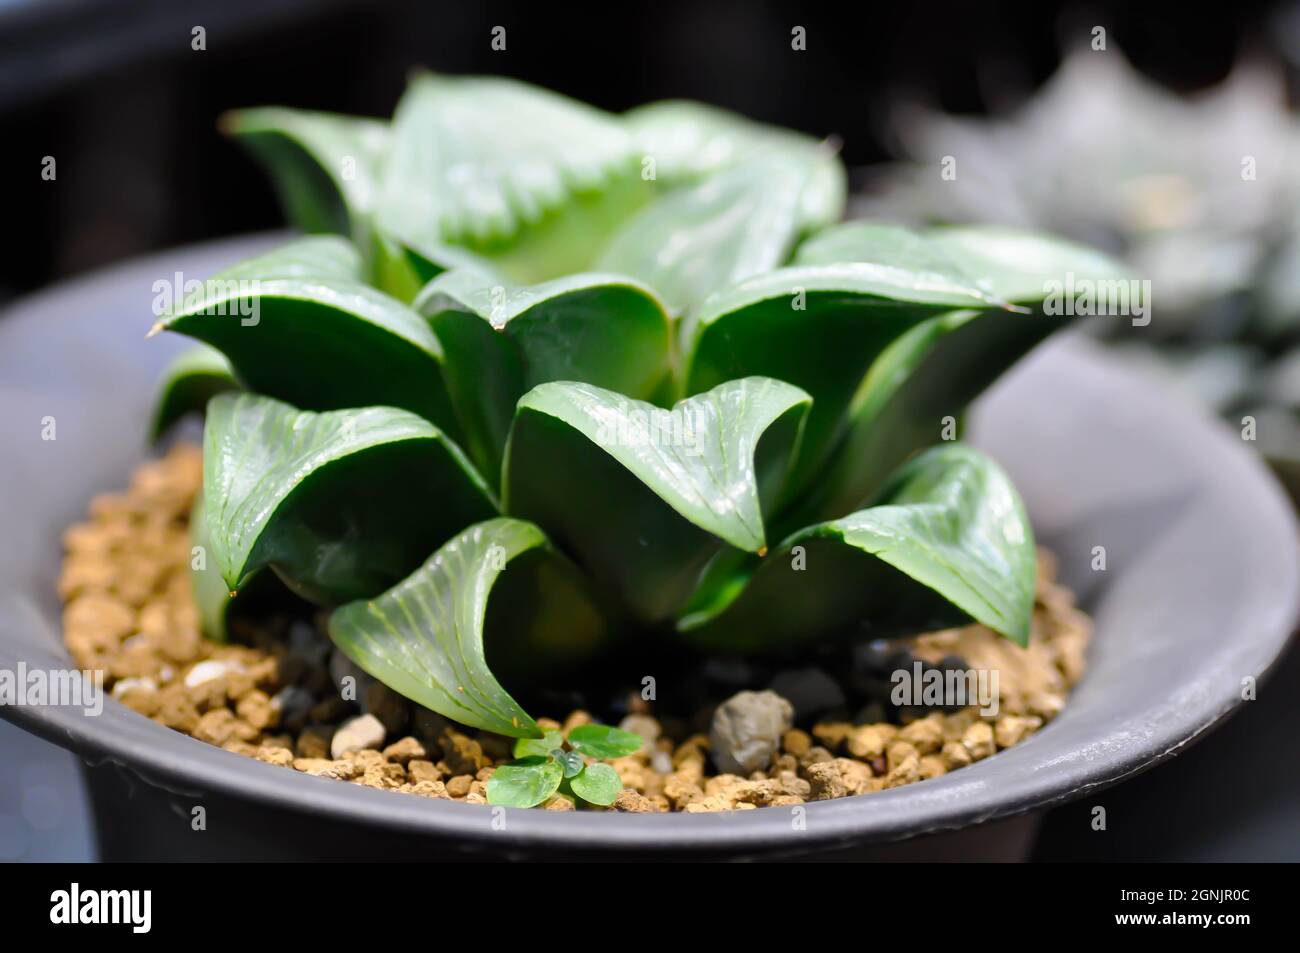 Haworthia ,Haworthia akanko or cactus or succulent in the flower pot Stock Photo